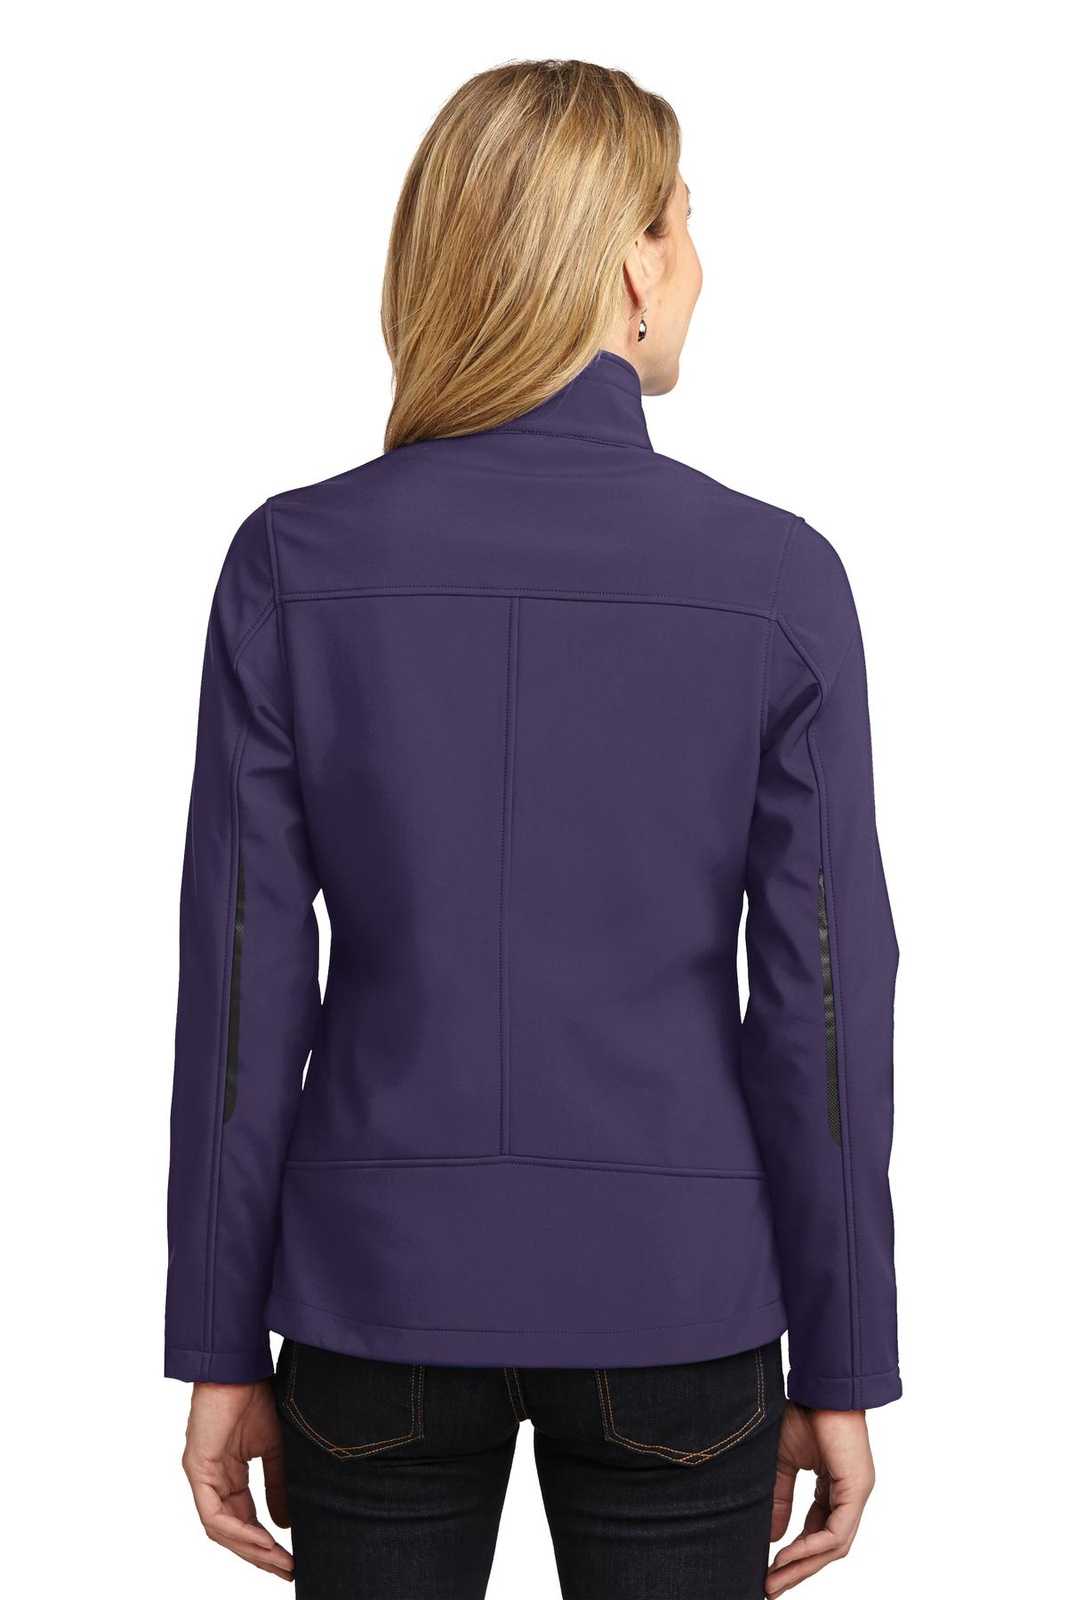 Port Authority L324 Ladies Welded Soft Shell Jacket - Posh Purple - HIT a Double - 2